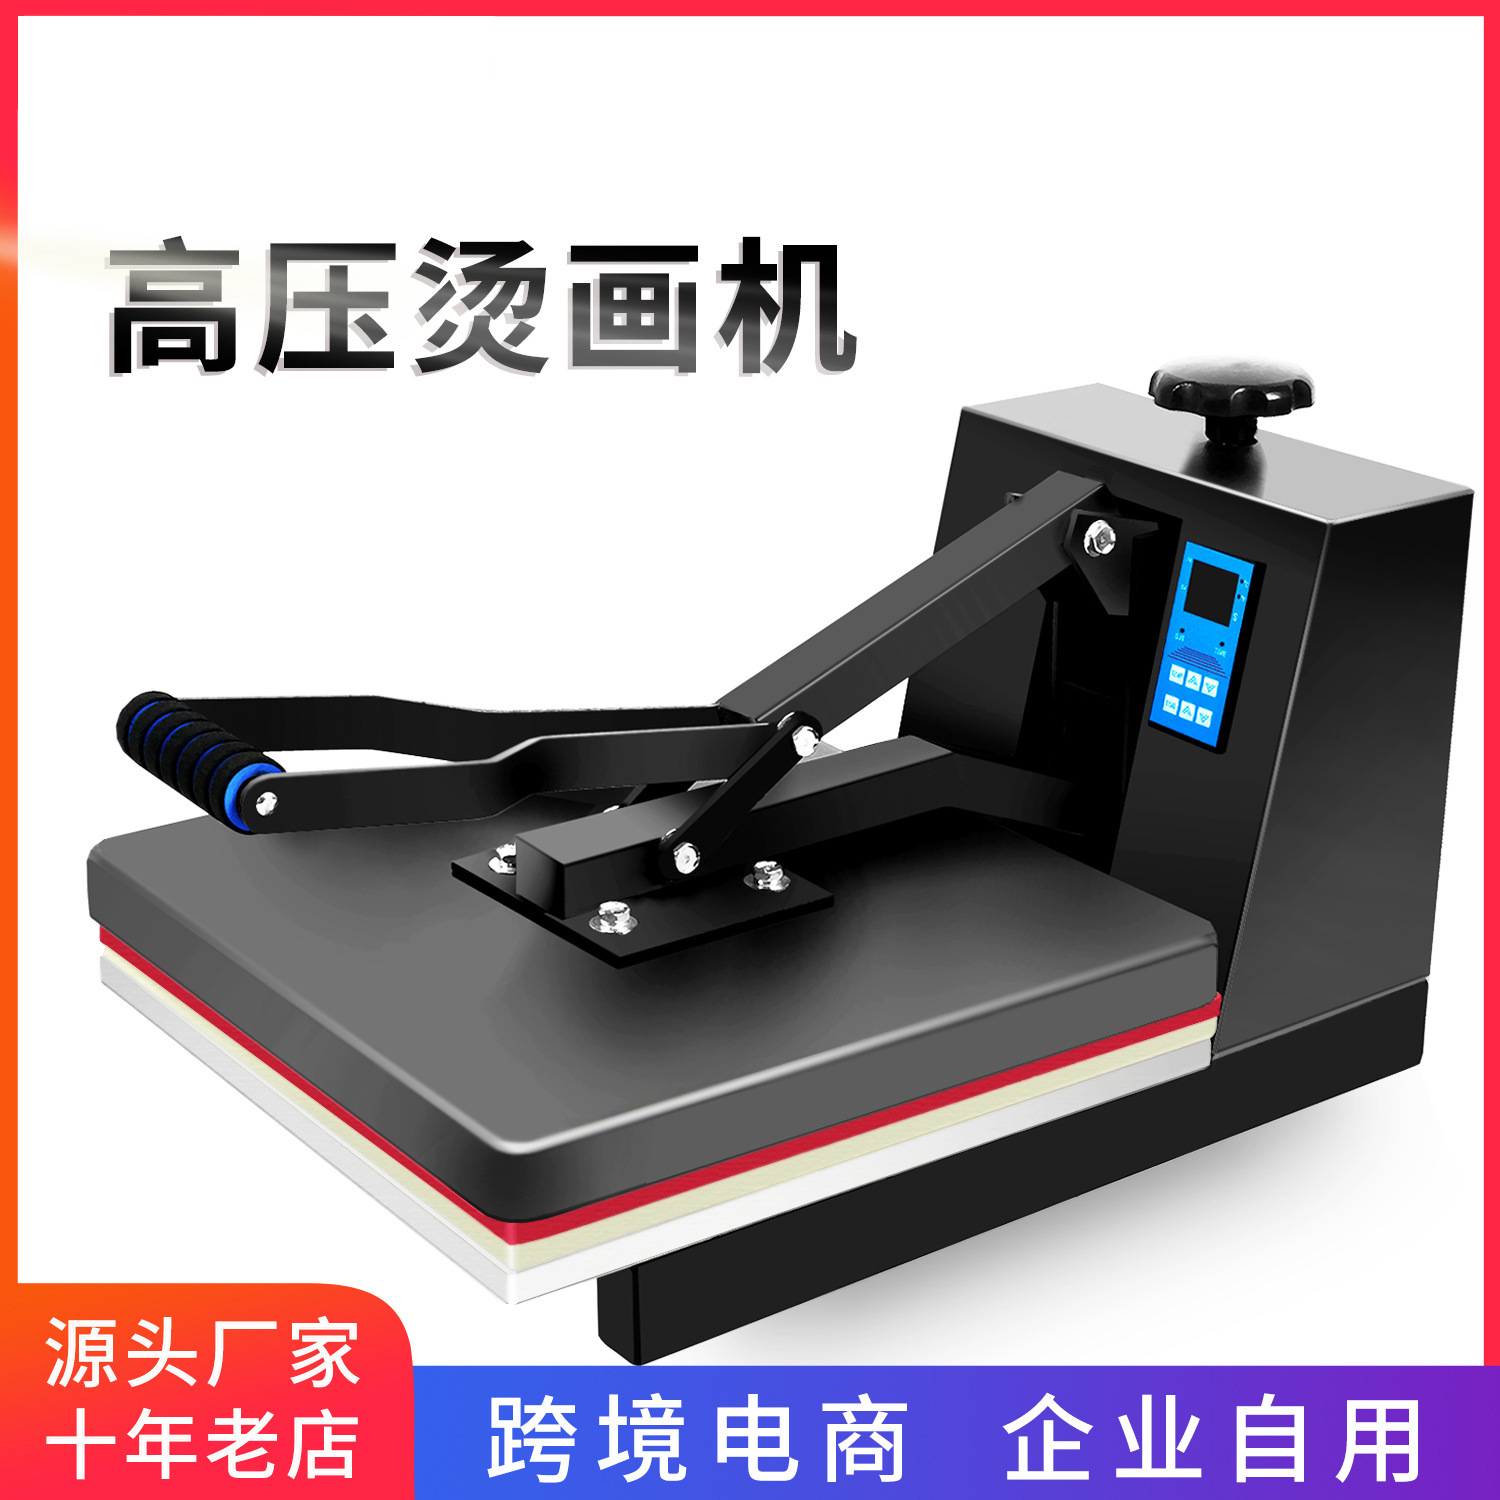 Flat Manual Transfer Heat Press Machine Brocade Banner Rhinestone T-shirt Picture Printing Clothes Ironing Multi-Function Heat Press Printing Machine